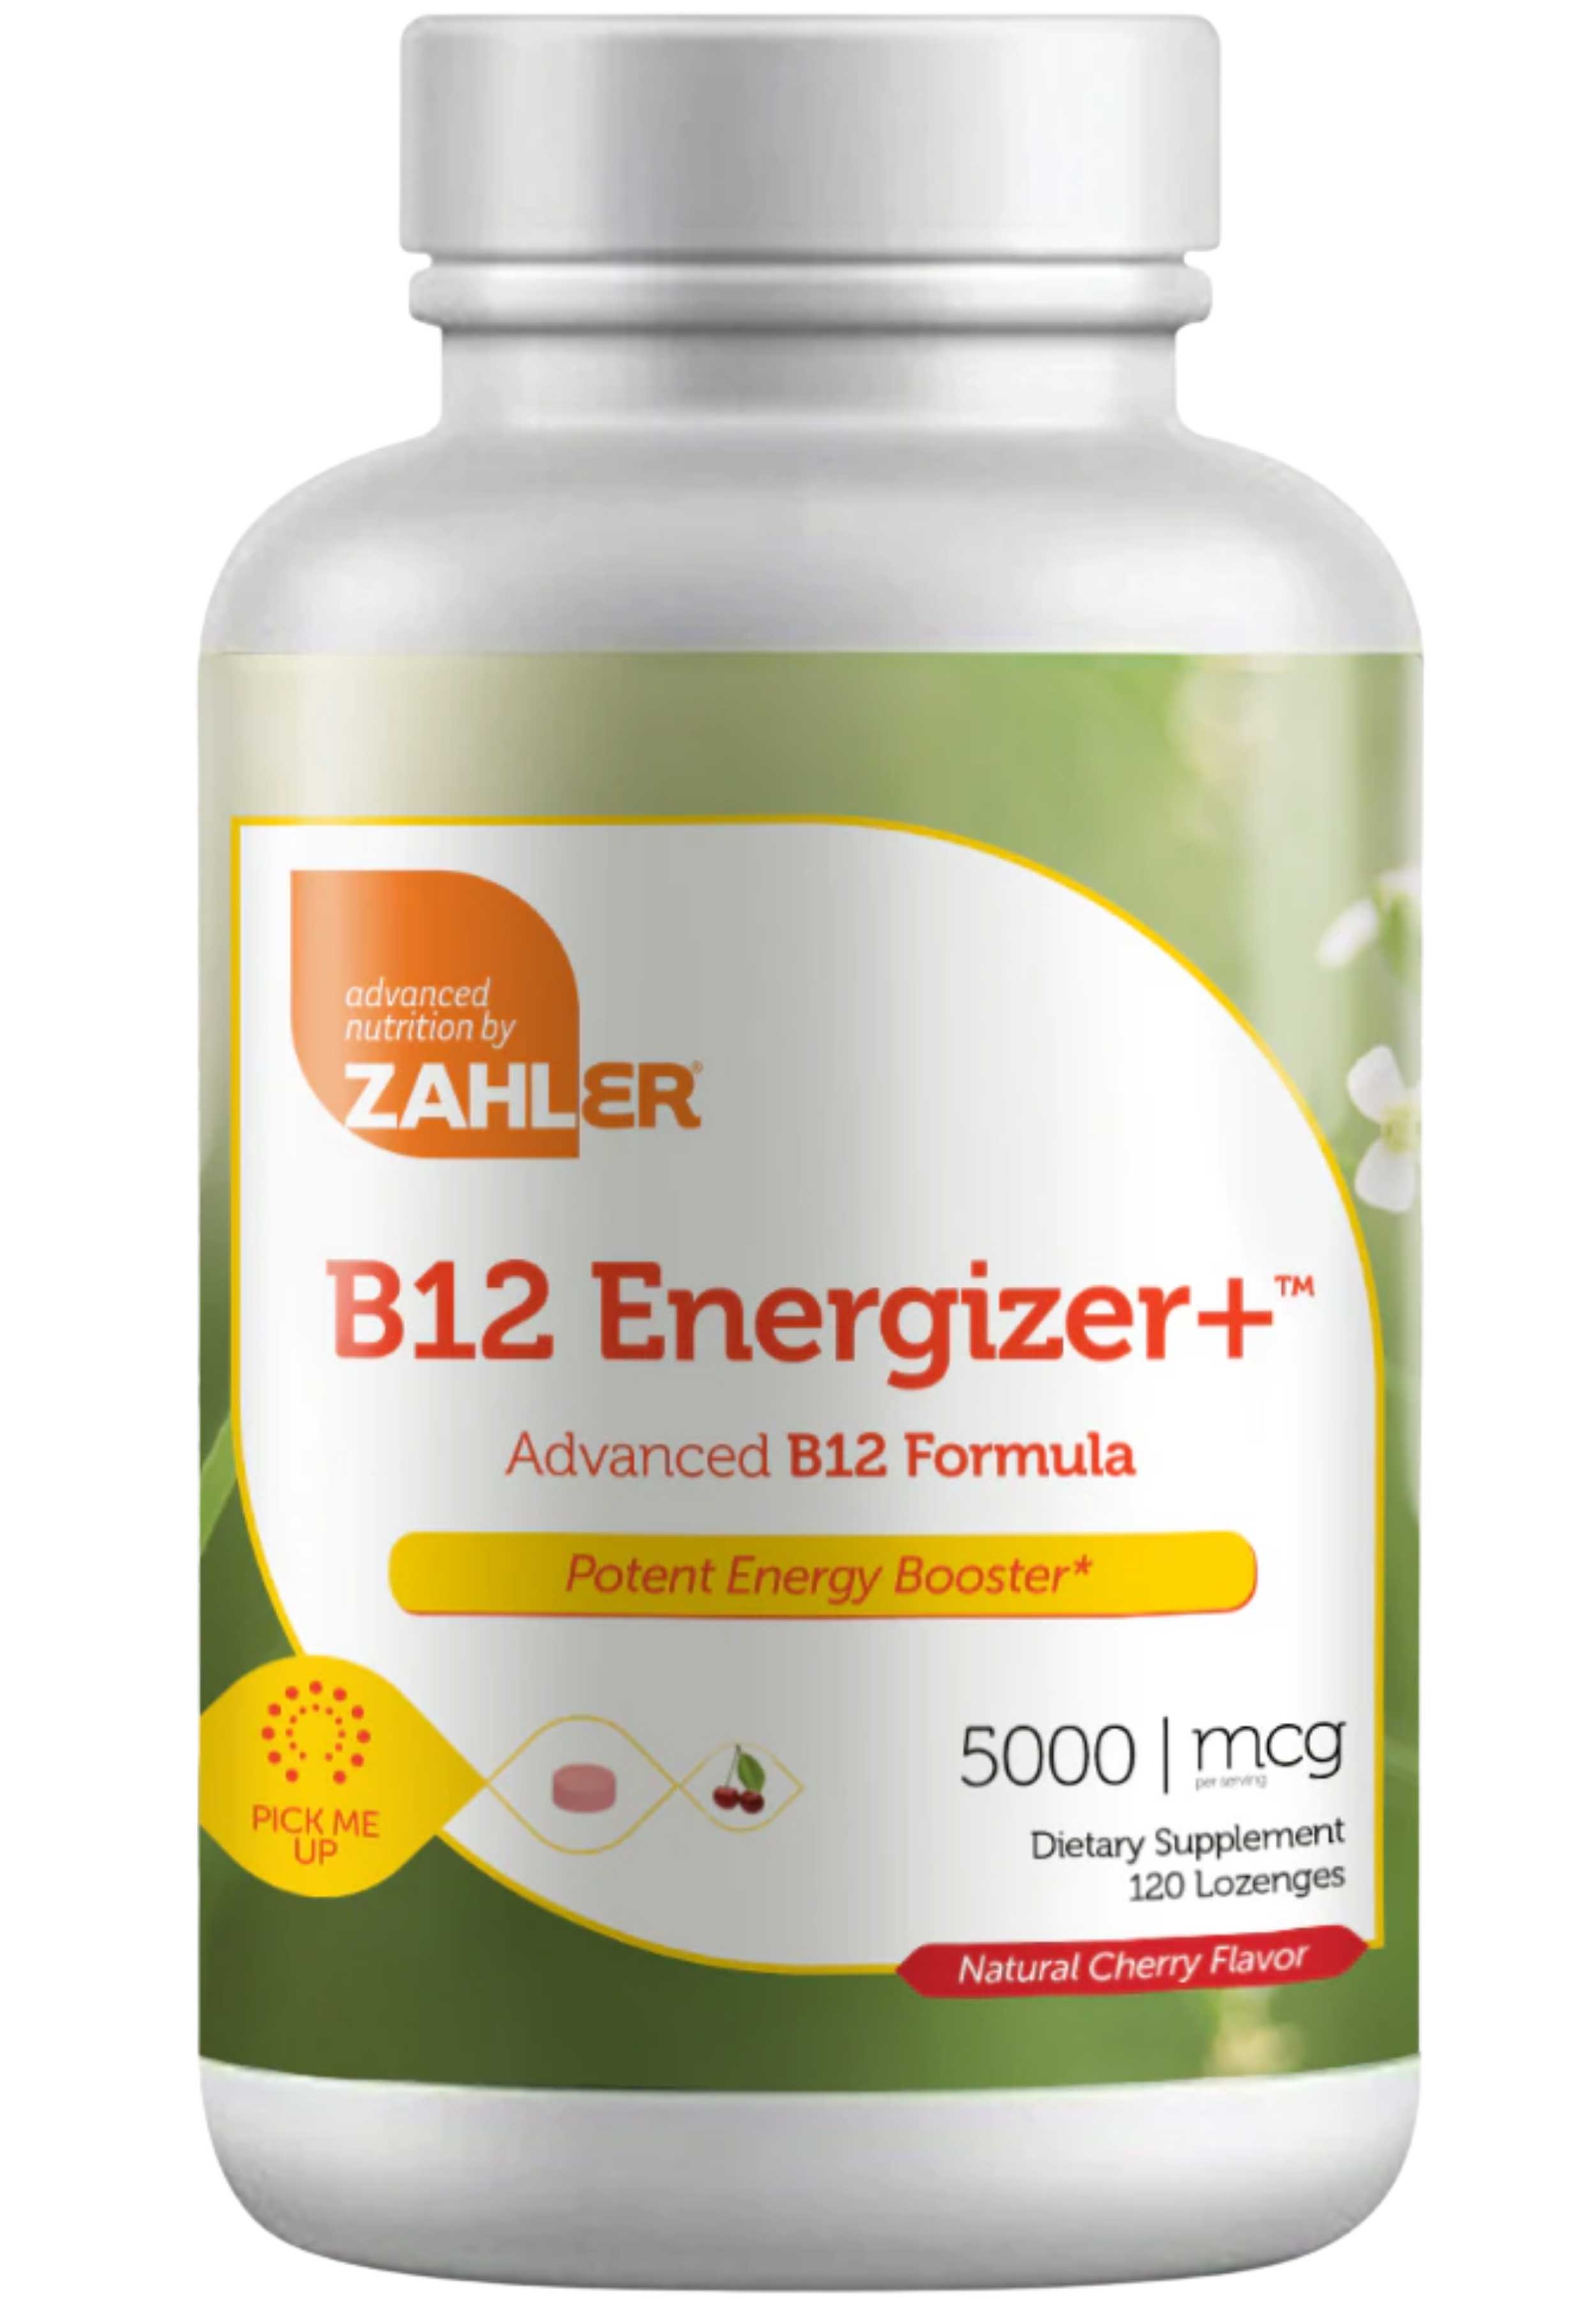 Advanced Nutrition By Zahler B12 Energizer+